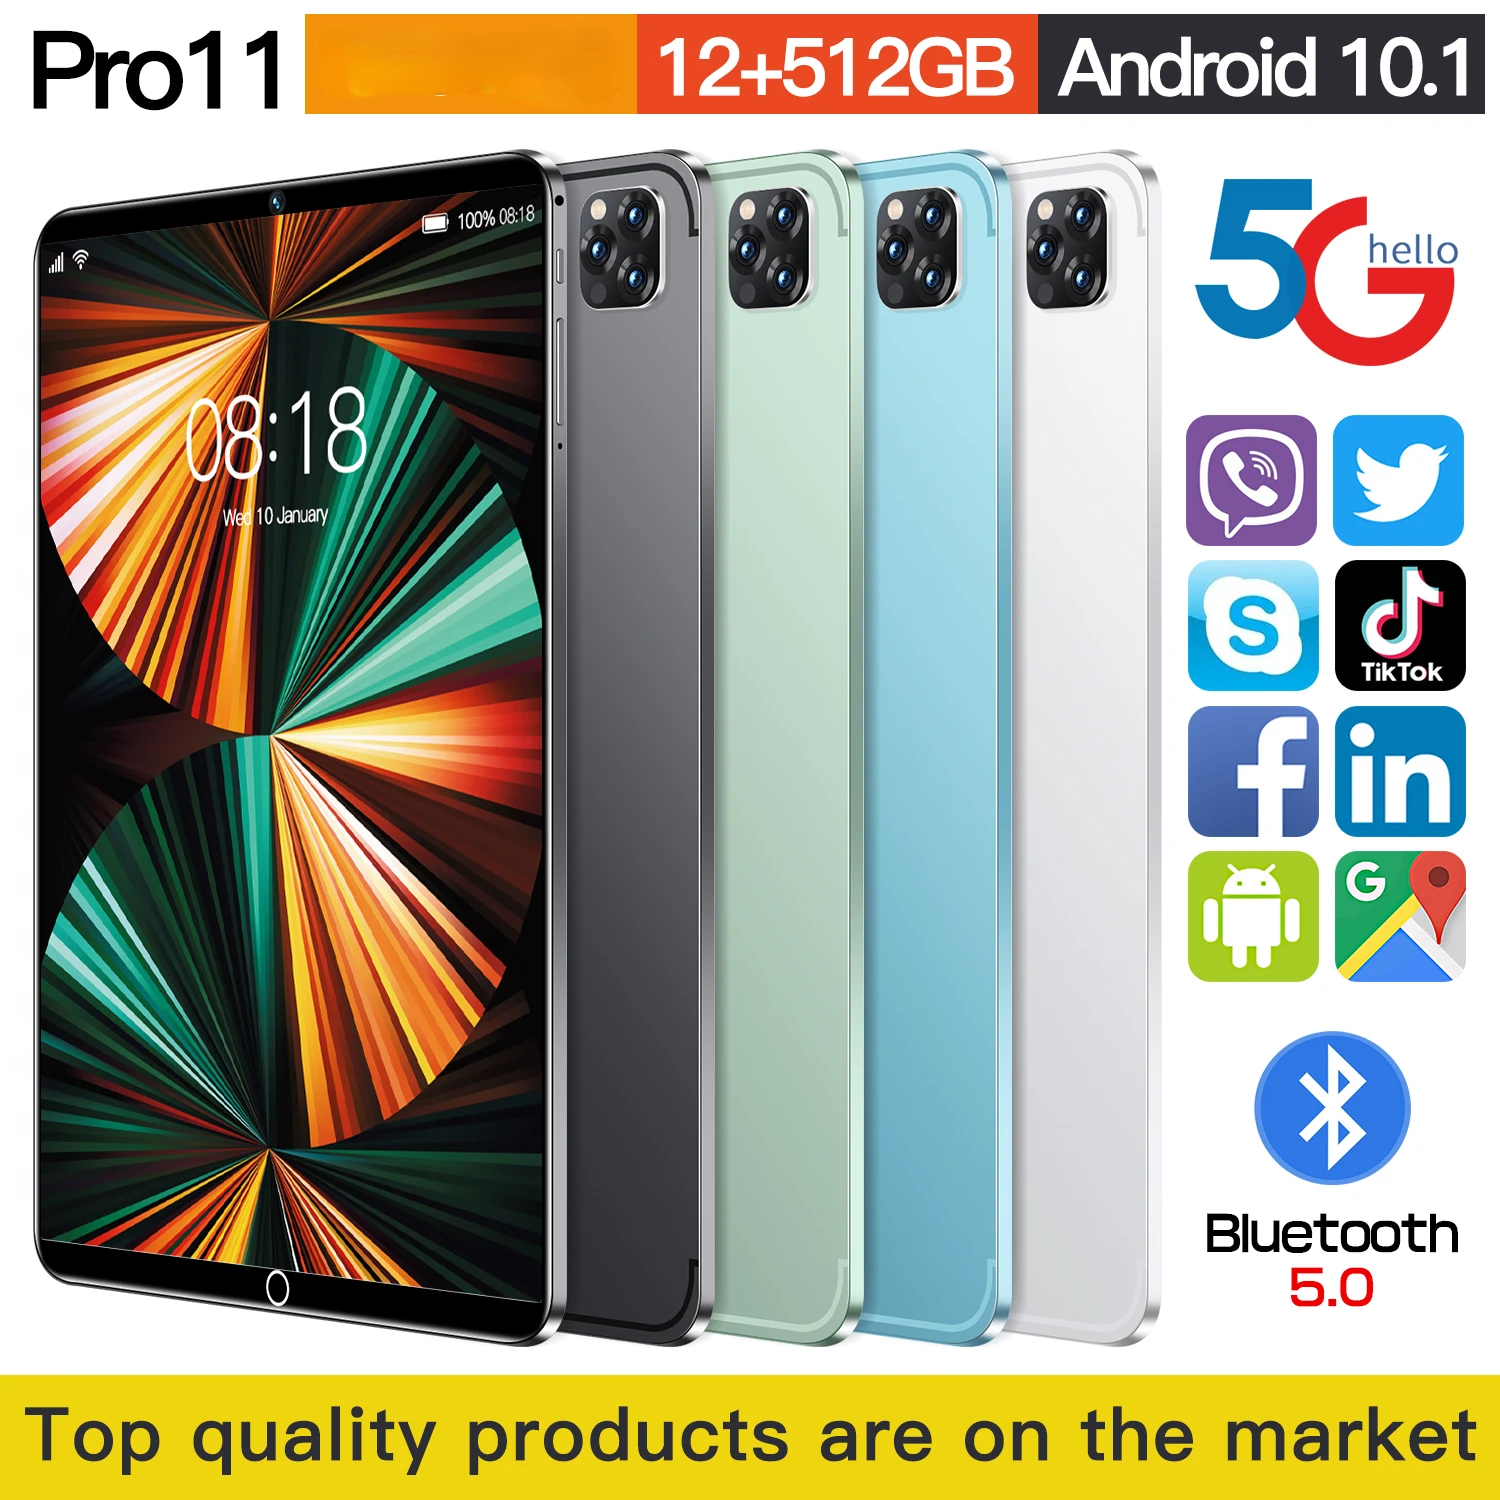 

Планшет P11 pro, 10,1 дюйма, Full HD, Android 10, две Sim-карты, 8800 мАч